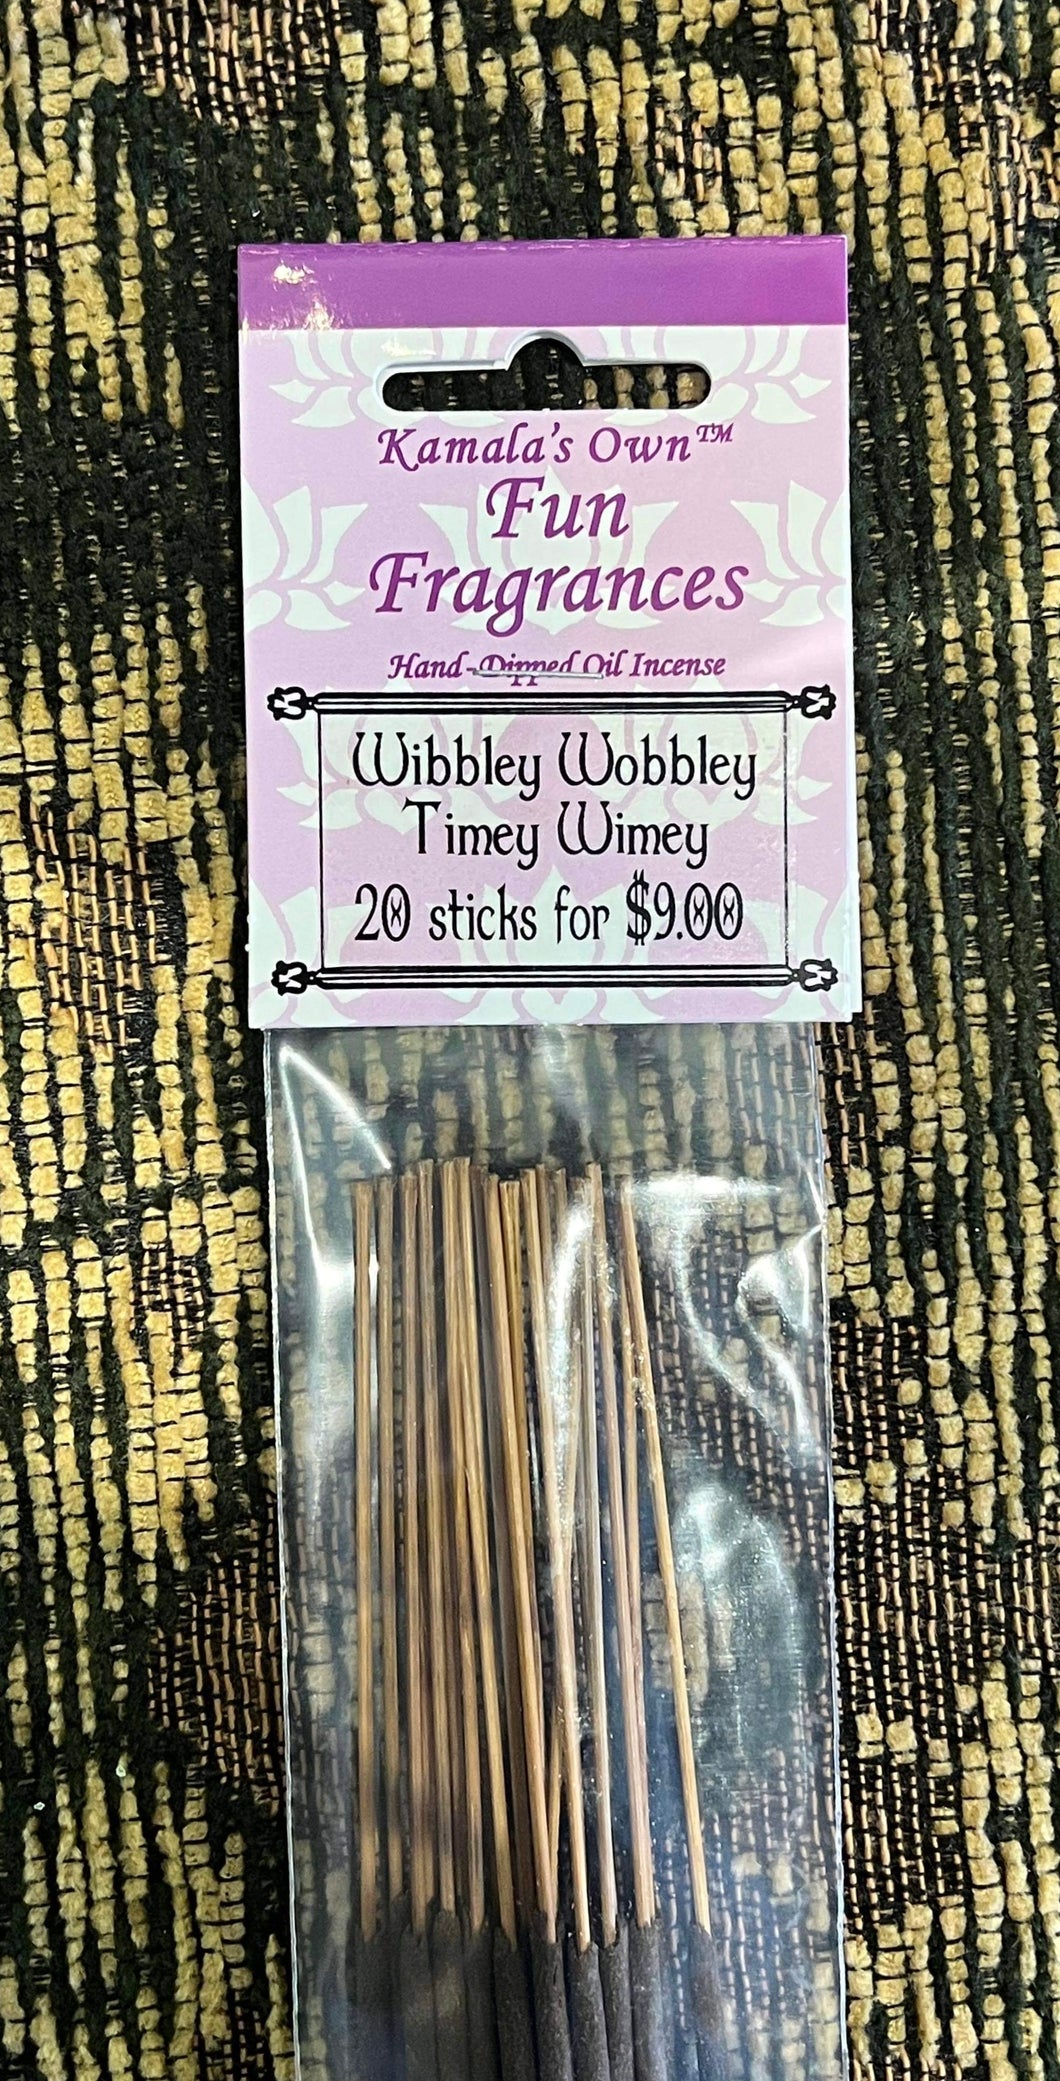 Wibbley Wobbley Timey Wimey incense sticks